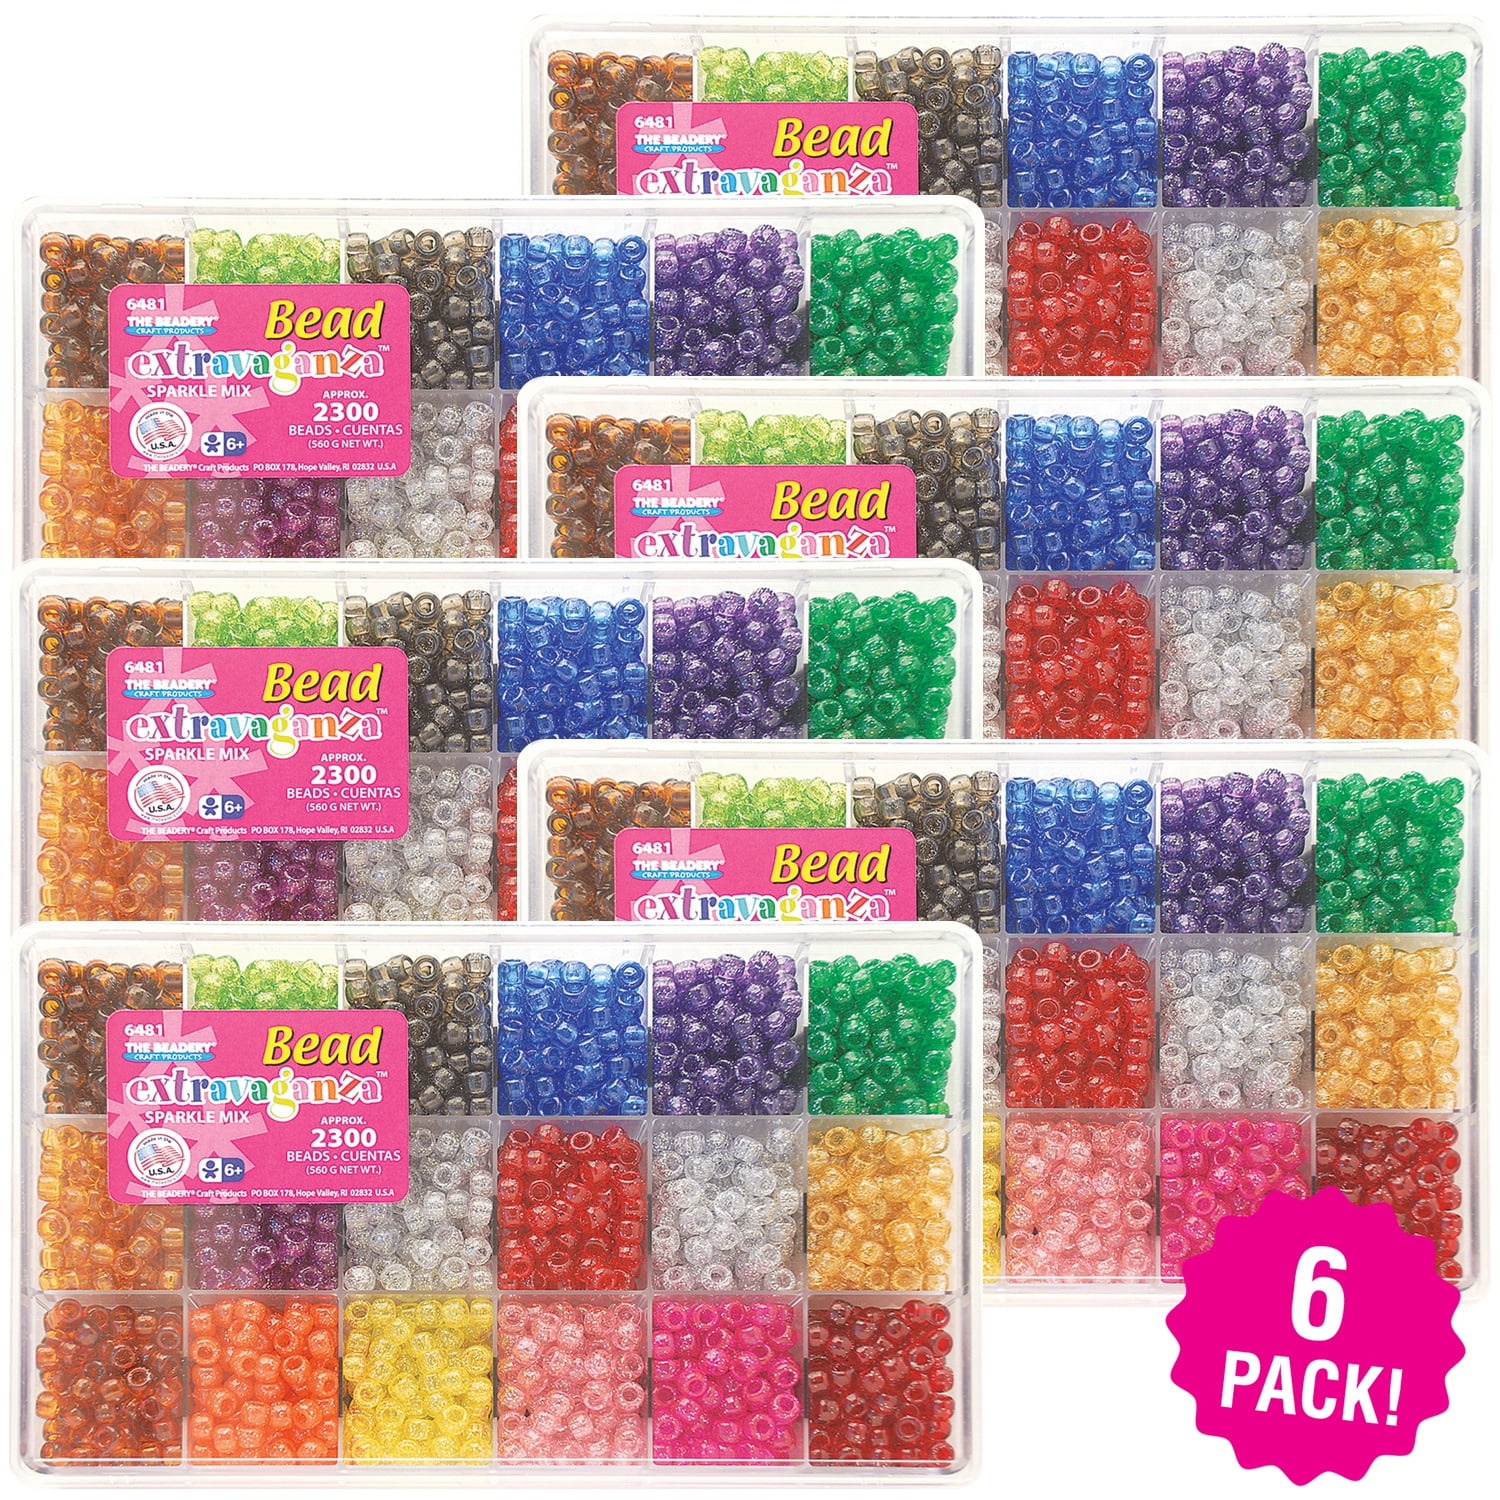 Bead Extravaganza Bead Box Kit 19.75oz-All Sparkle, 1 count - Kroger